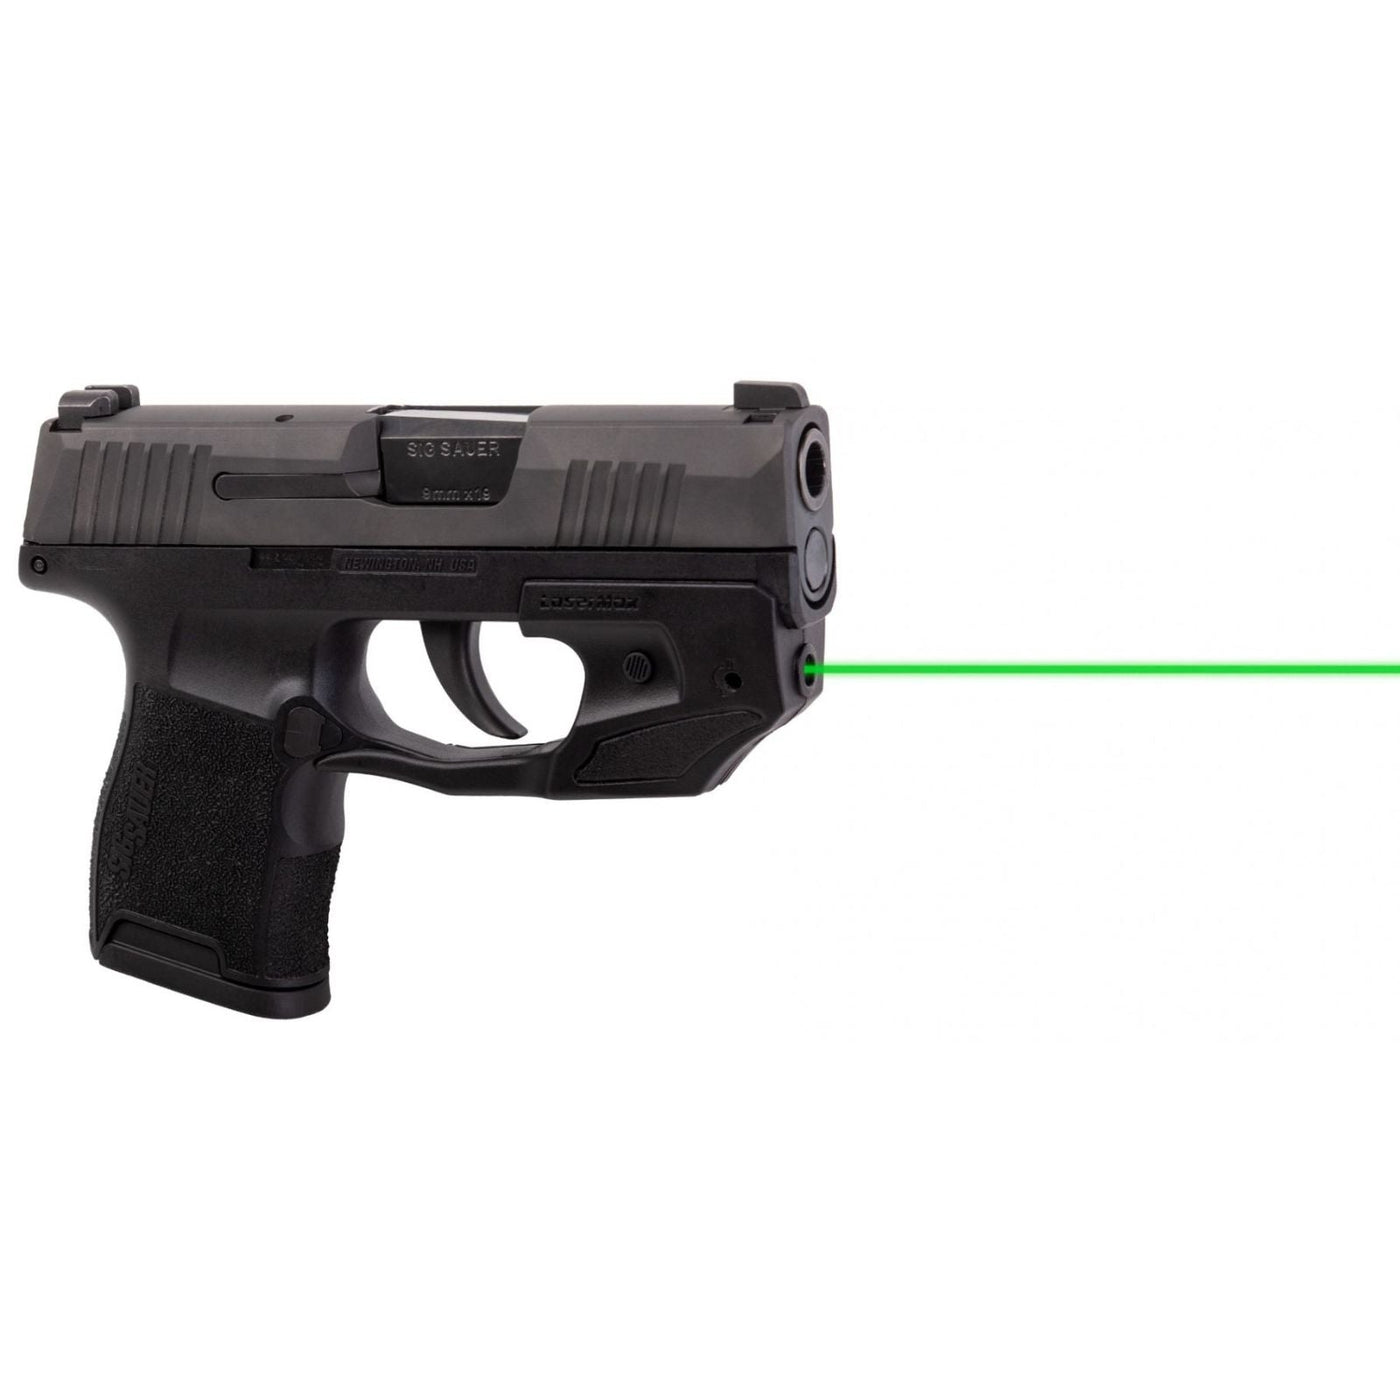 LaserMax LaserMax Centerfire Laser Green With Gripsense Sig P365 Optics And Sights